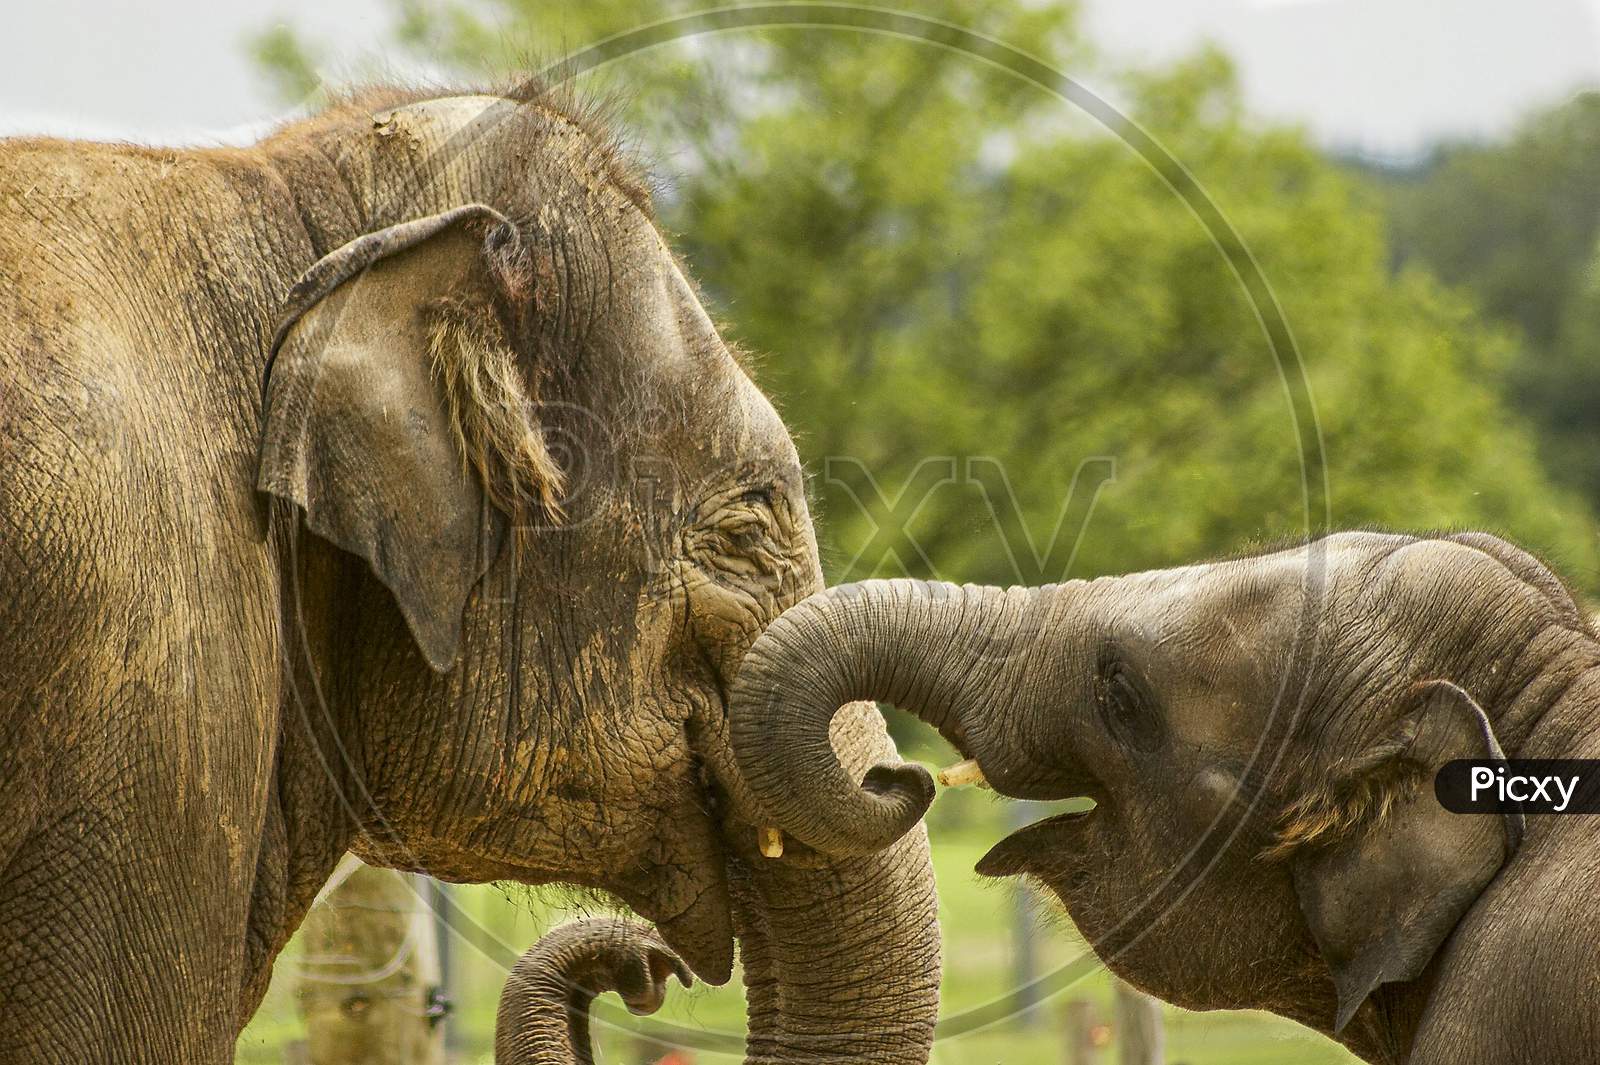 Elephants love